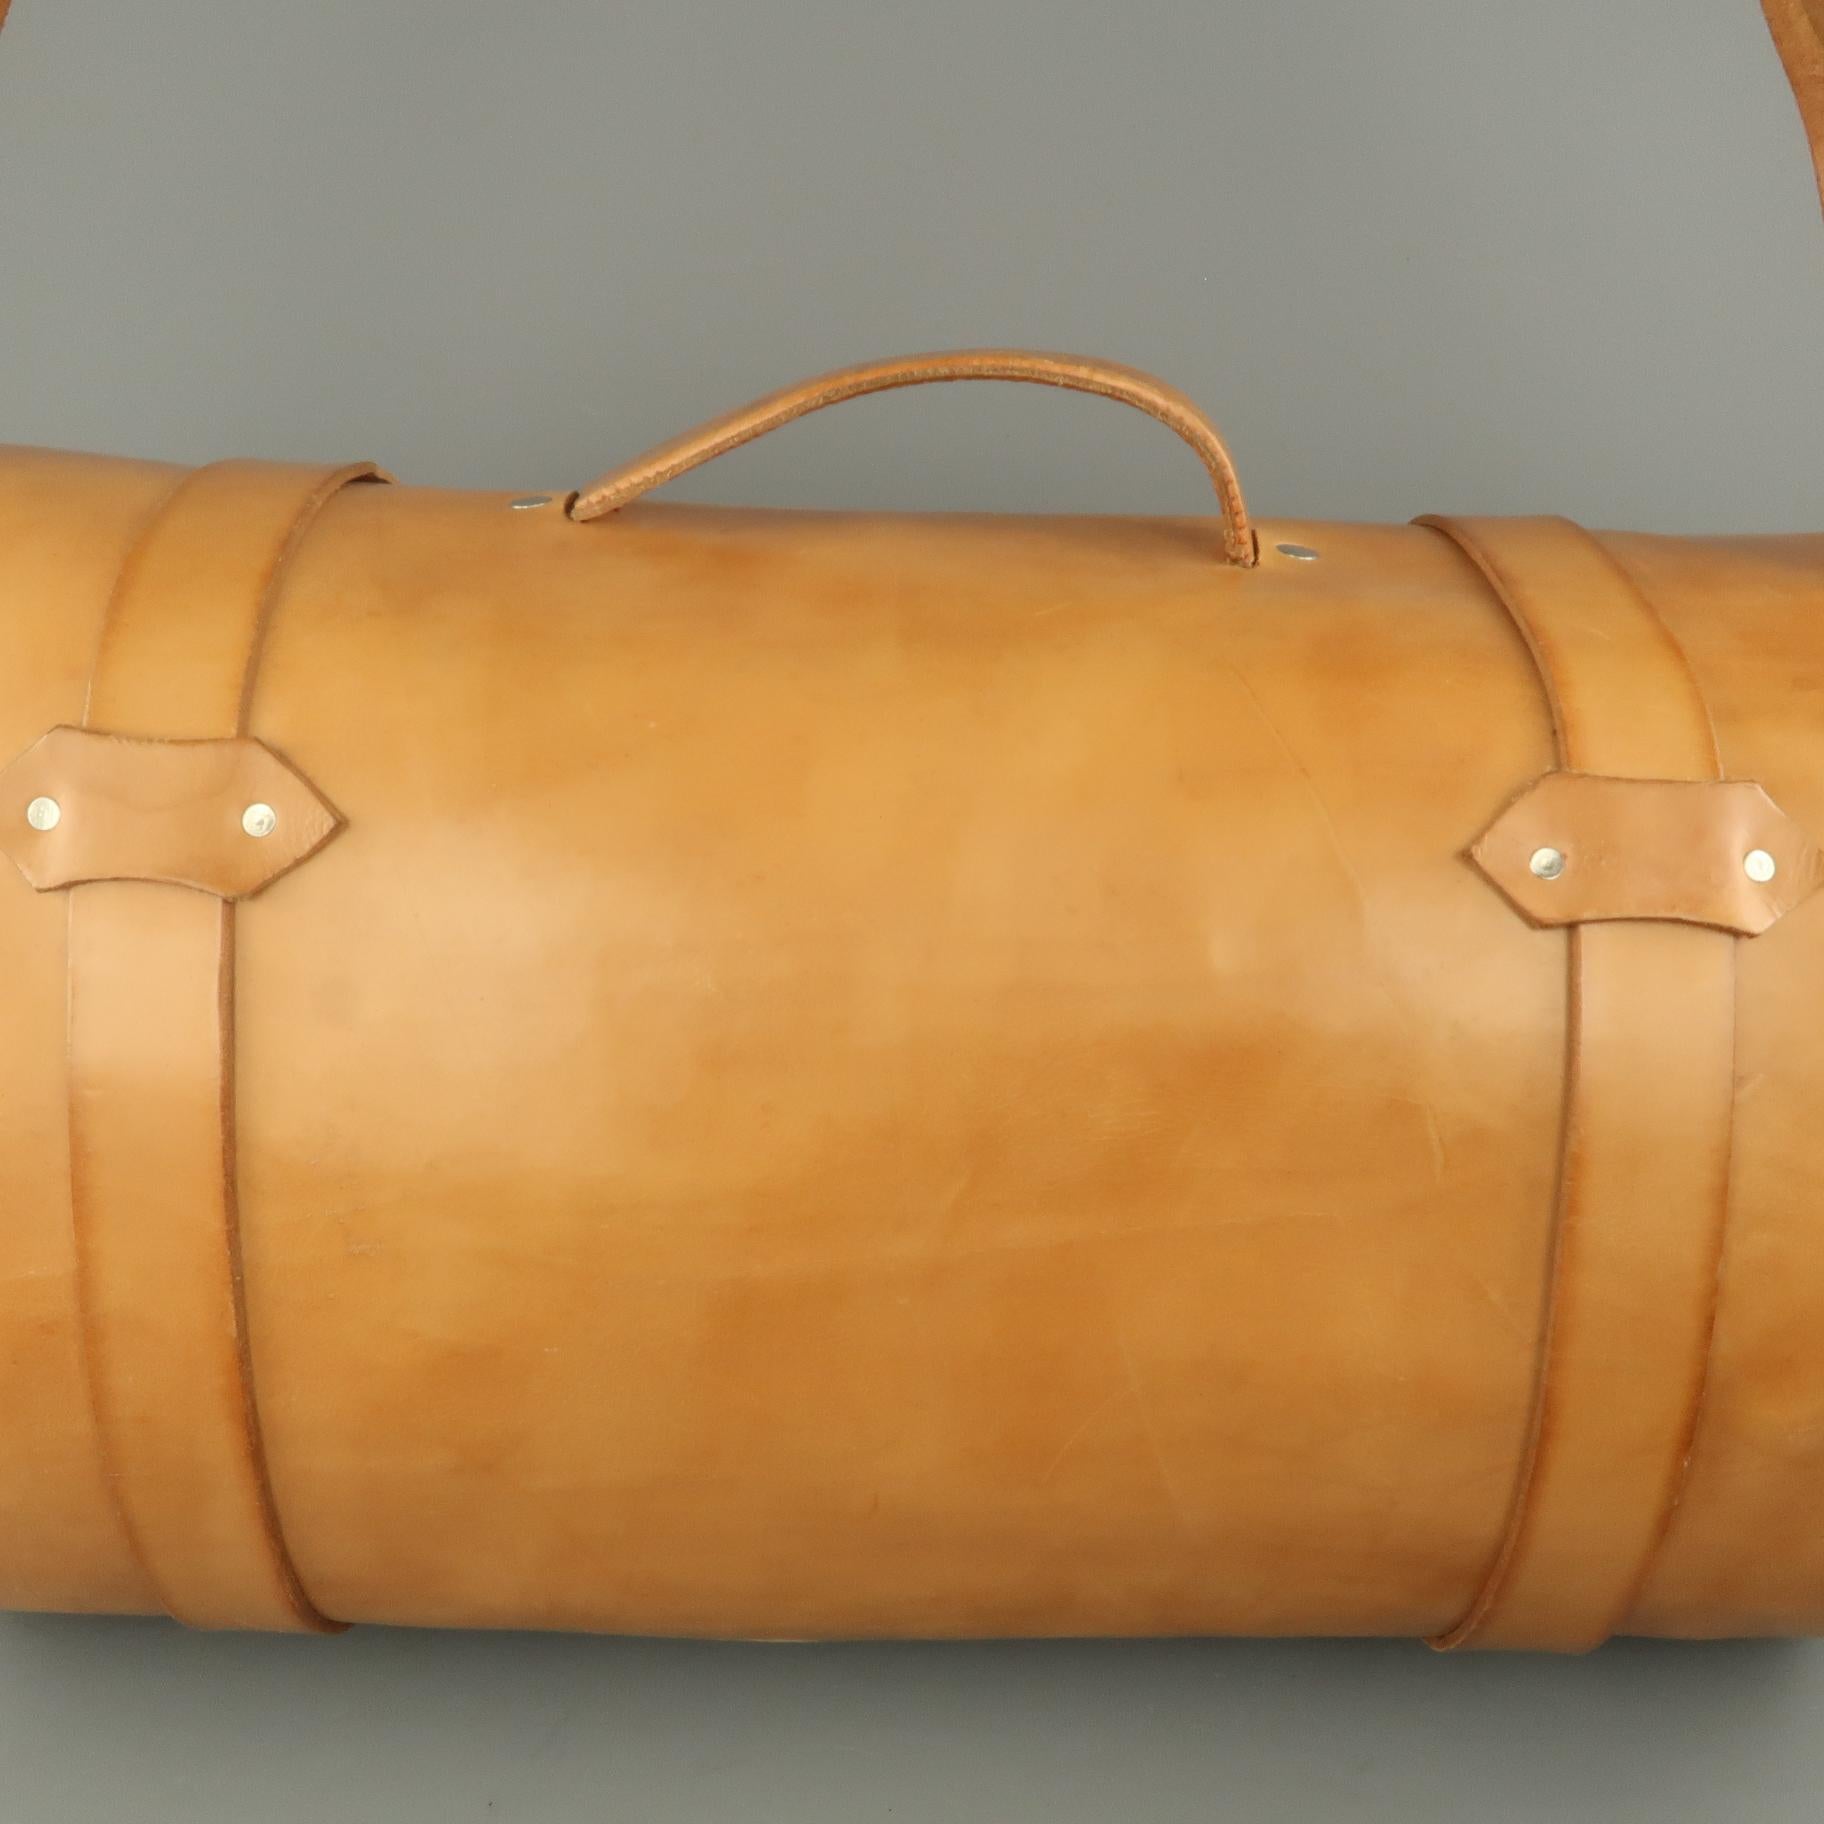 EUROPEAN NATURAL LEATHER BAGS Tan Leather Duffle Woven Trim Duffle Bag 5